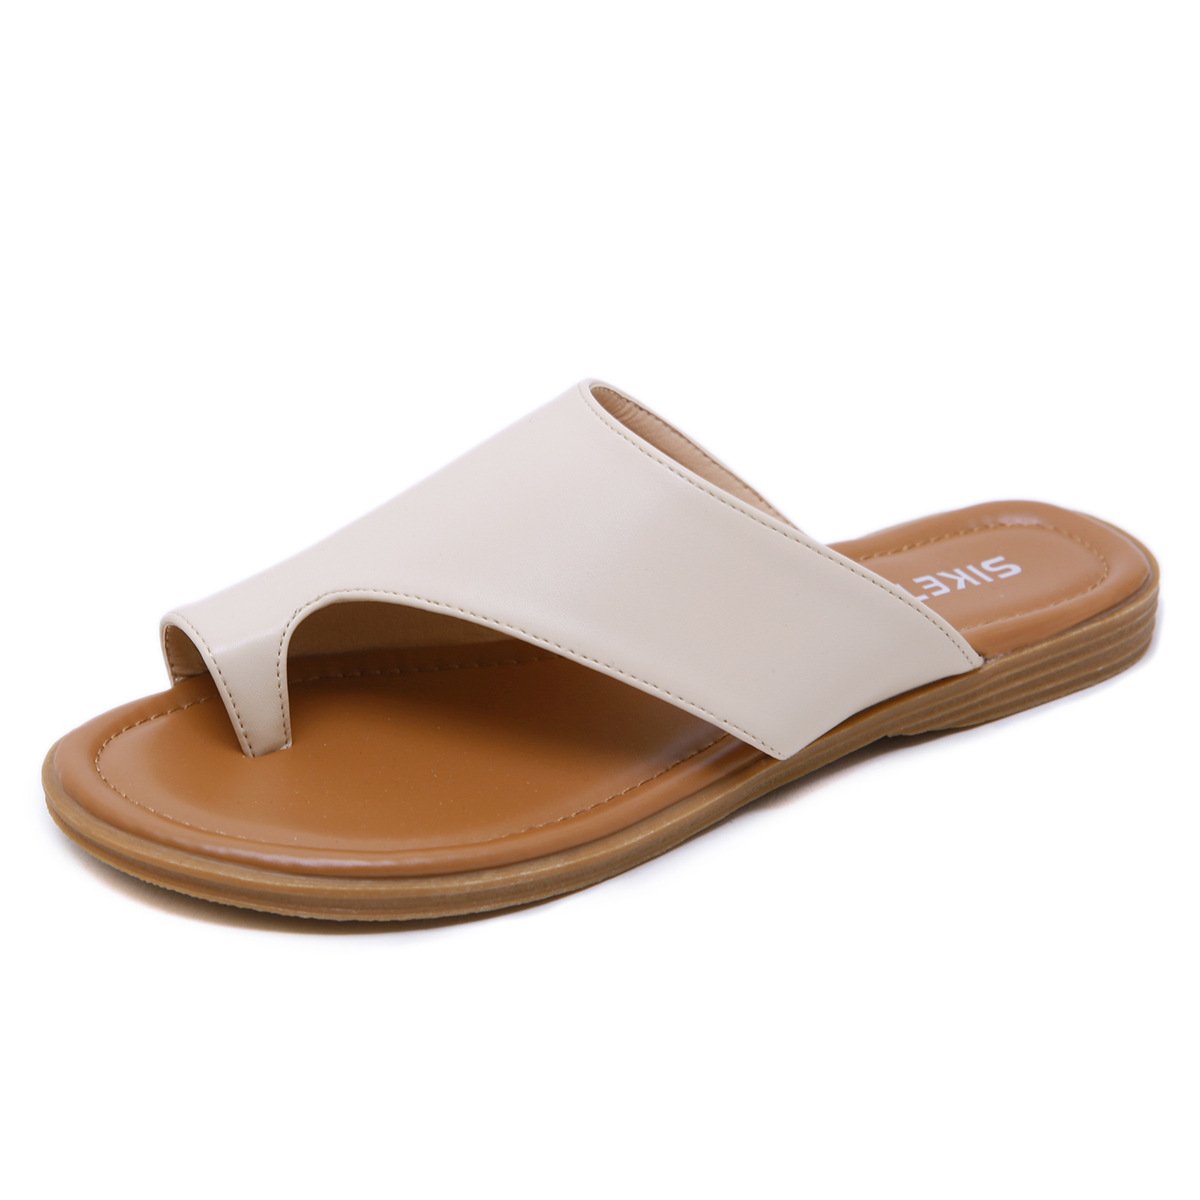 Belifi - 50% OFF Bunion Corrector Sandals